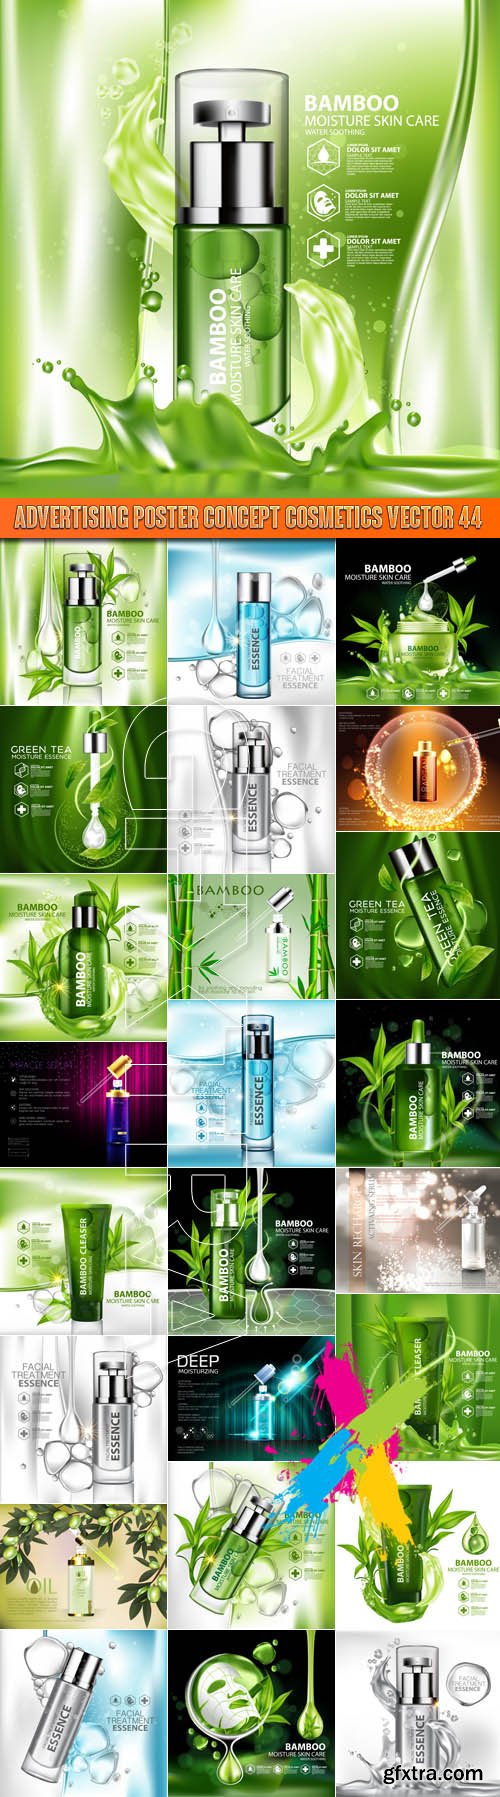 Advertising Poster Concept Cosmetics vector 44